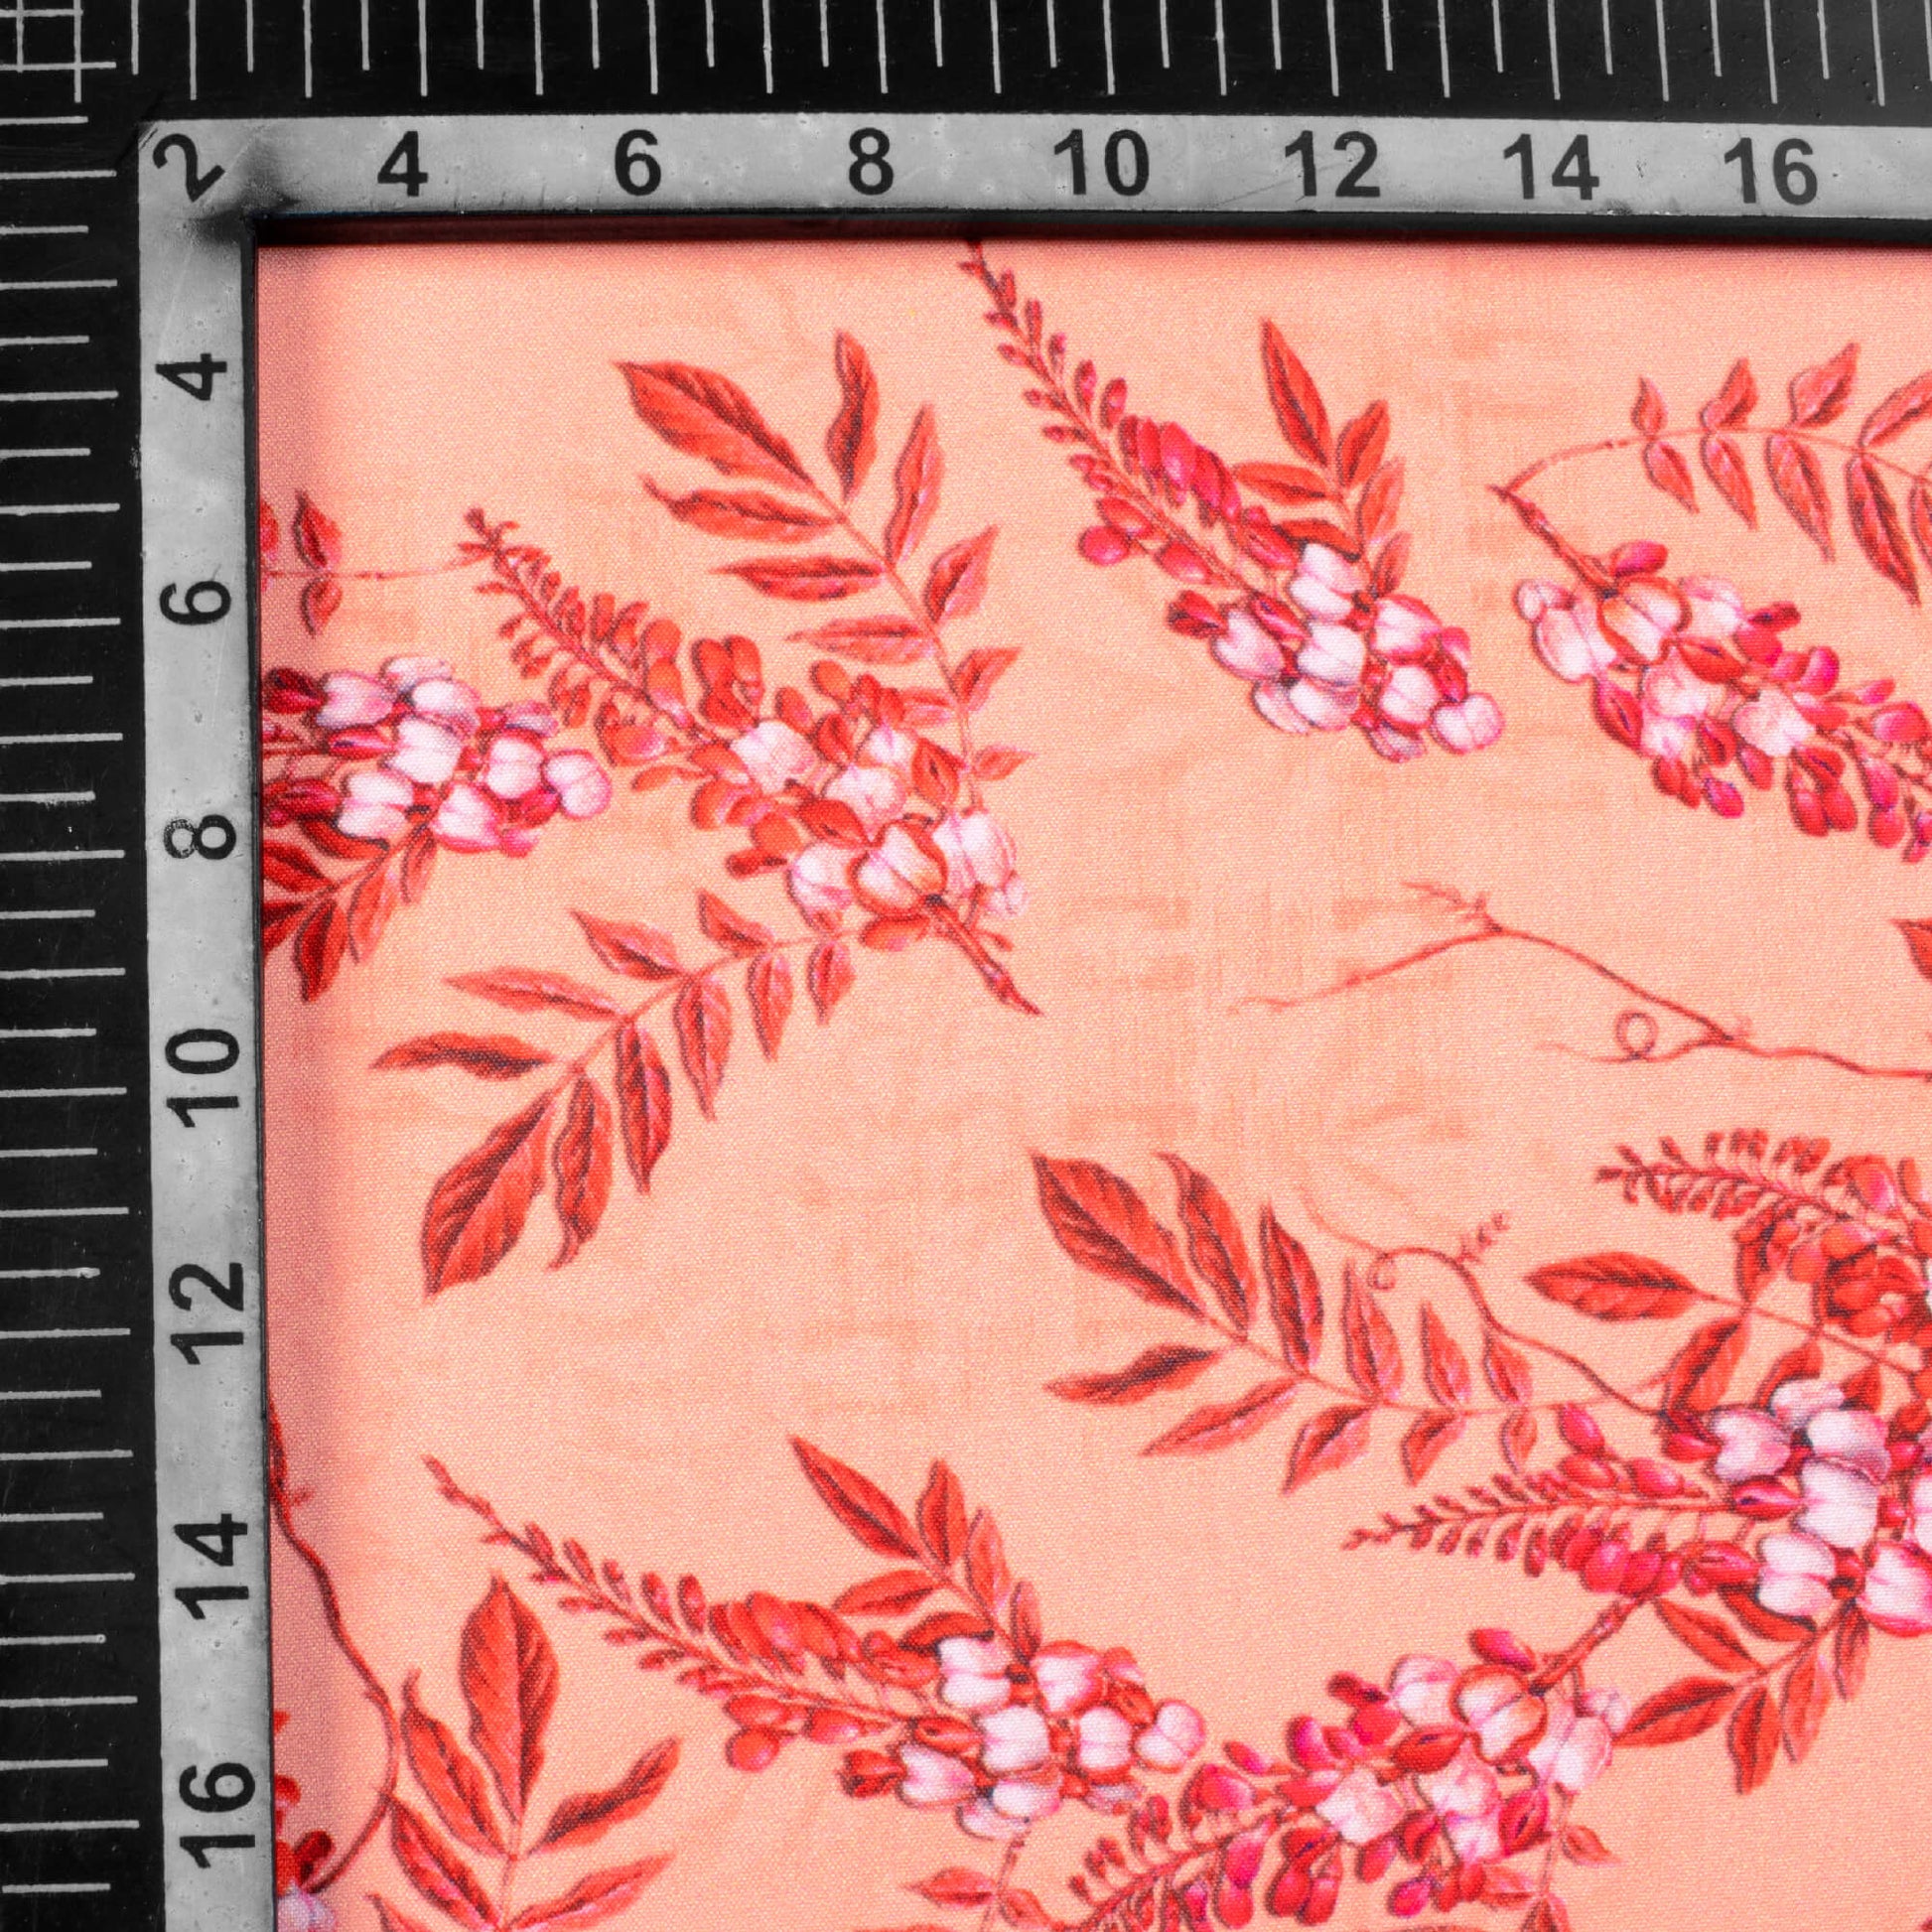 Peach And Red Leaf Pattern Digital Print Ultra Premium Butter Crepe Fabric - Fabcurate